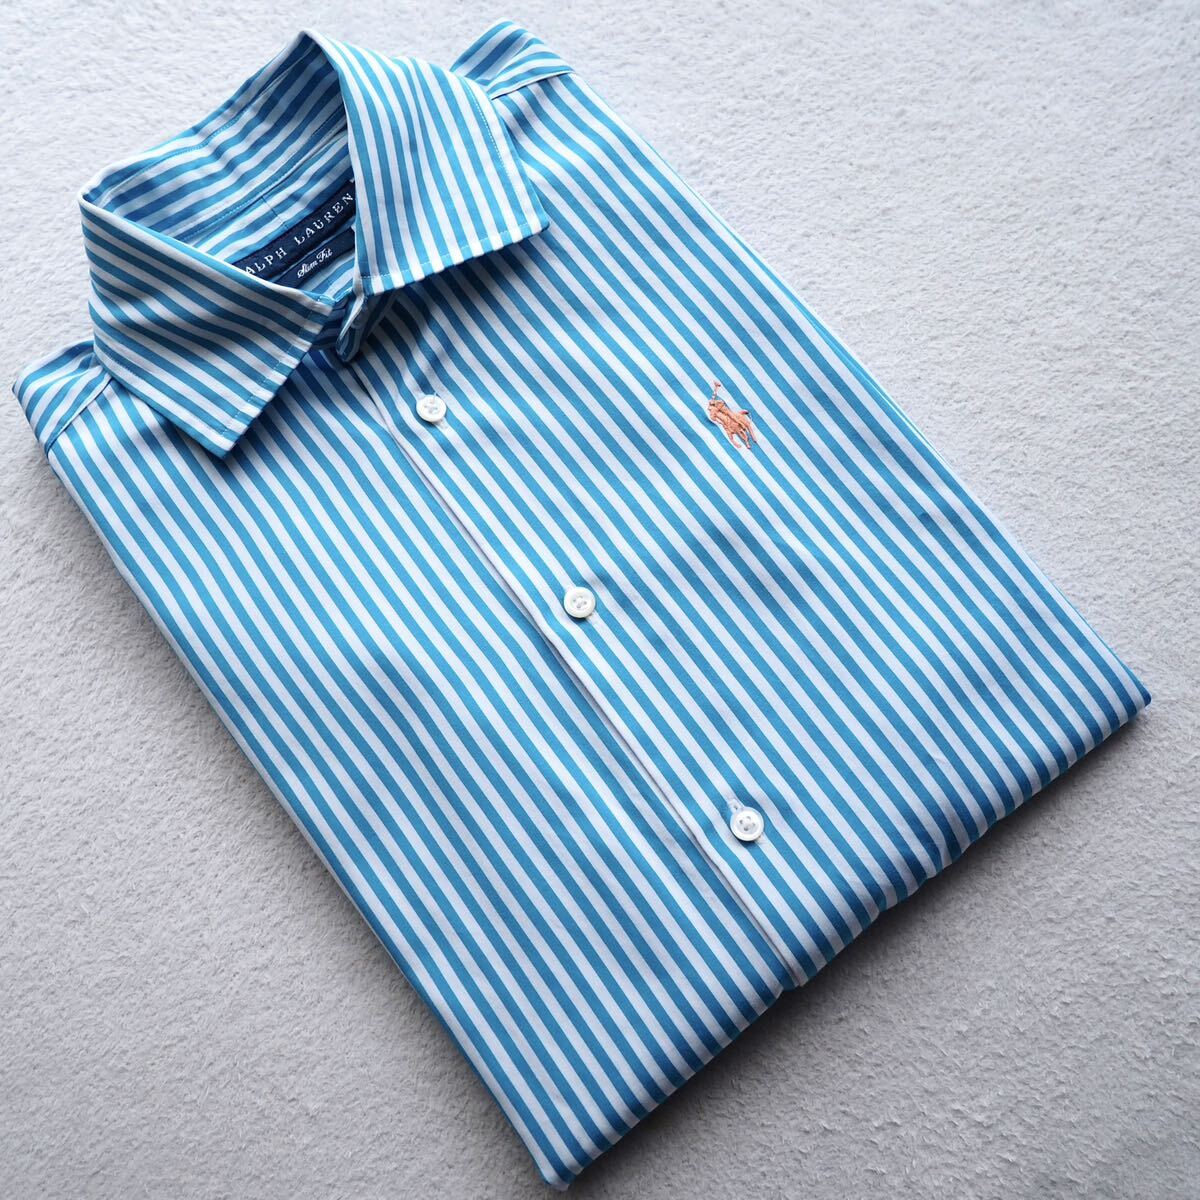 RALPH LAUREN ラルフローレン ポニー刺繍 ストライプシャツ コットンシャツ 長袖シャツ SLIM FIT スリムフィット ライトブルー 青 水色_画像3